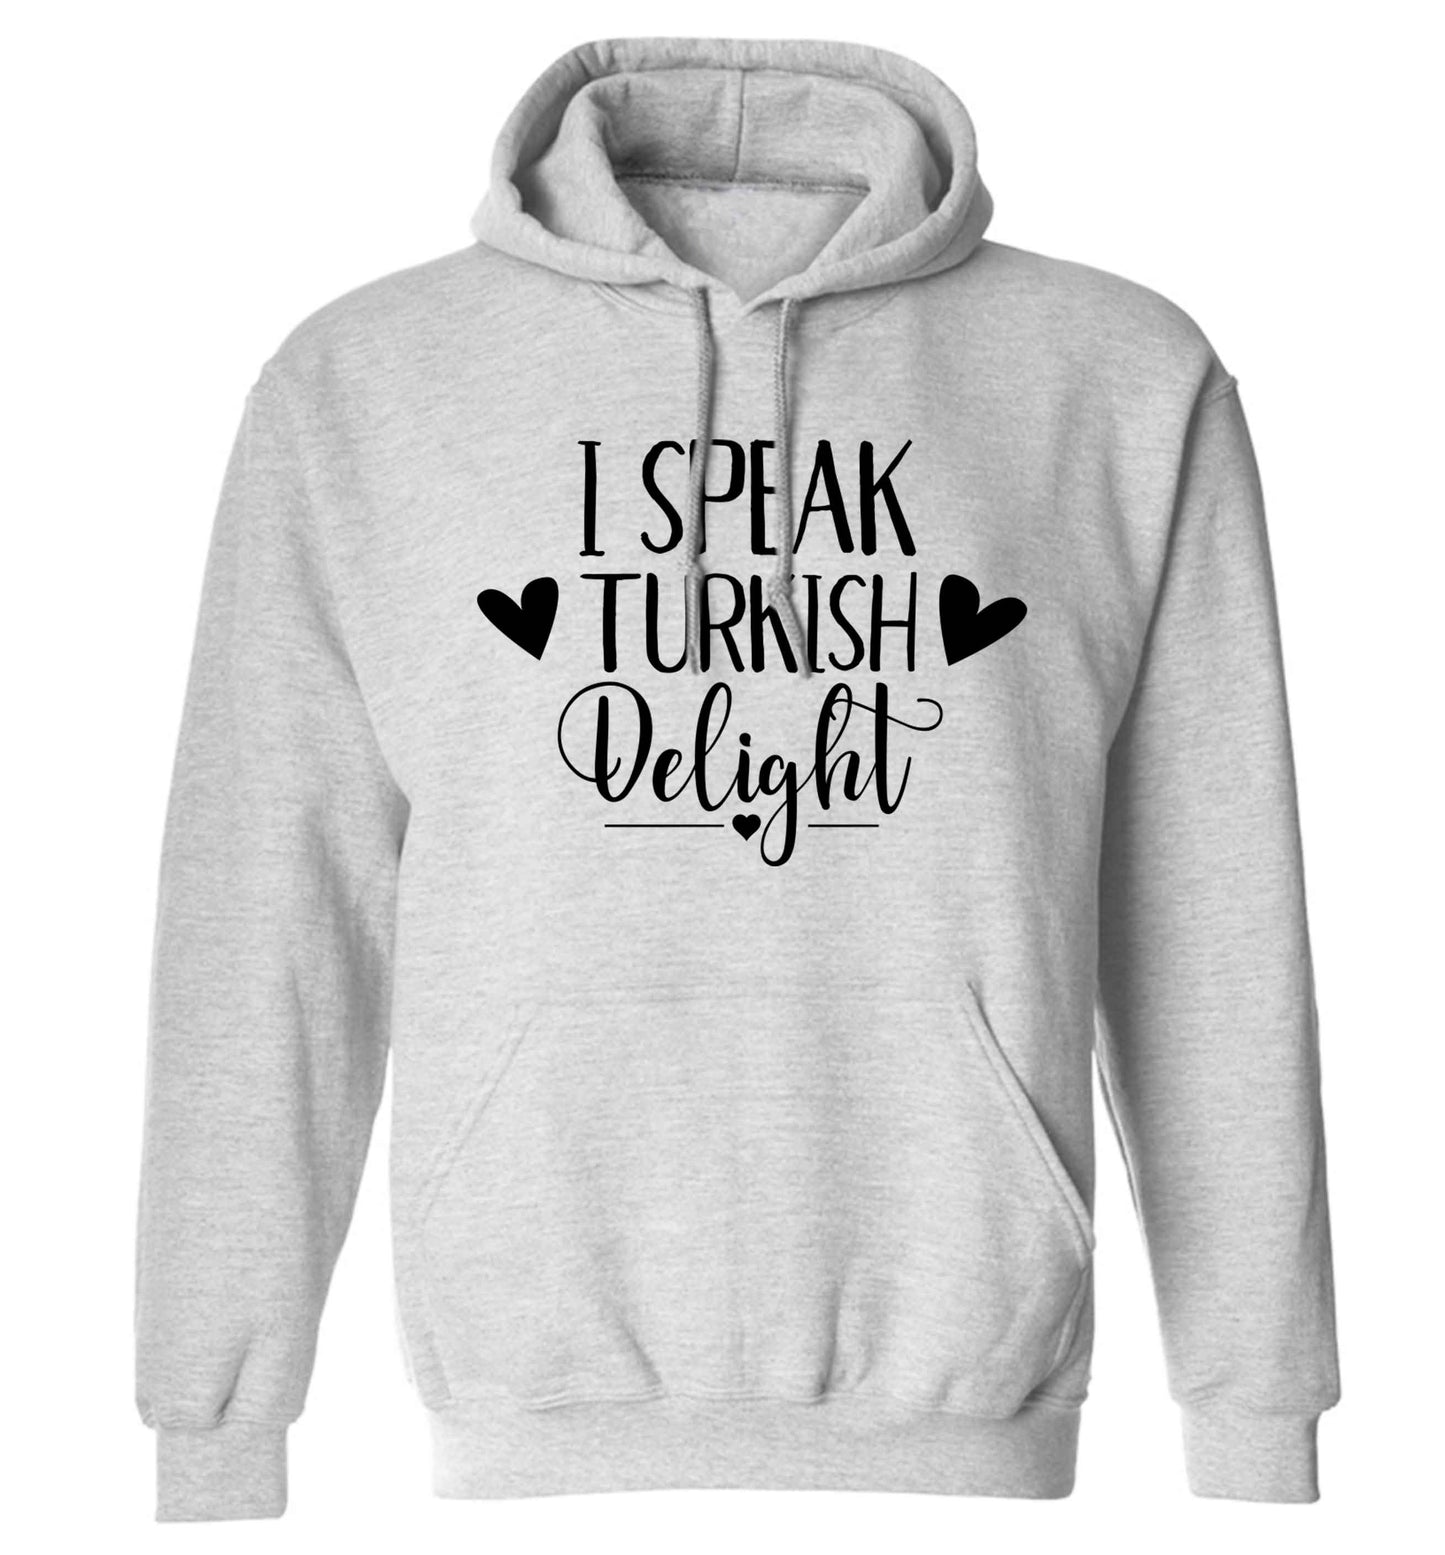 I speak turkish...delight adults unisex grey hoodie 2XL